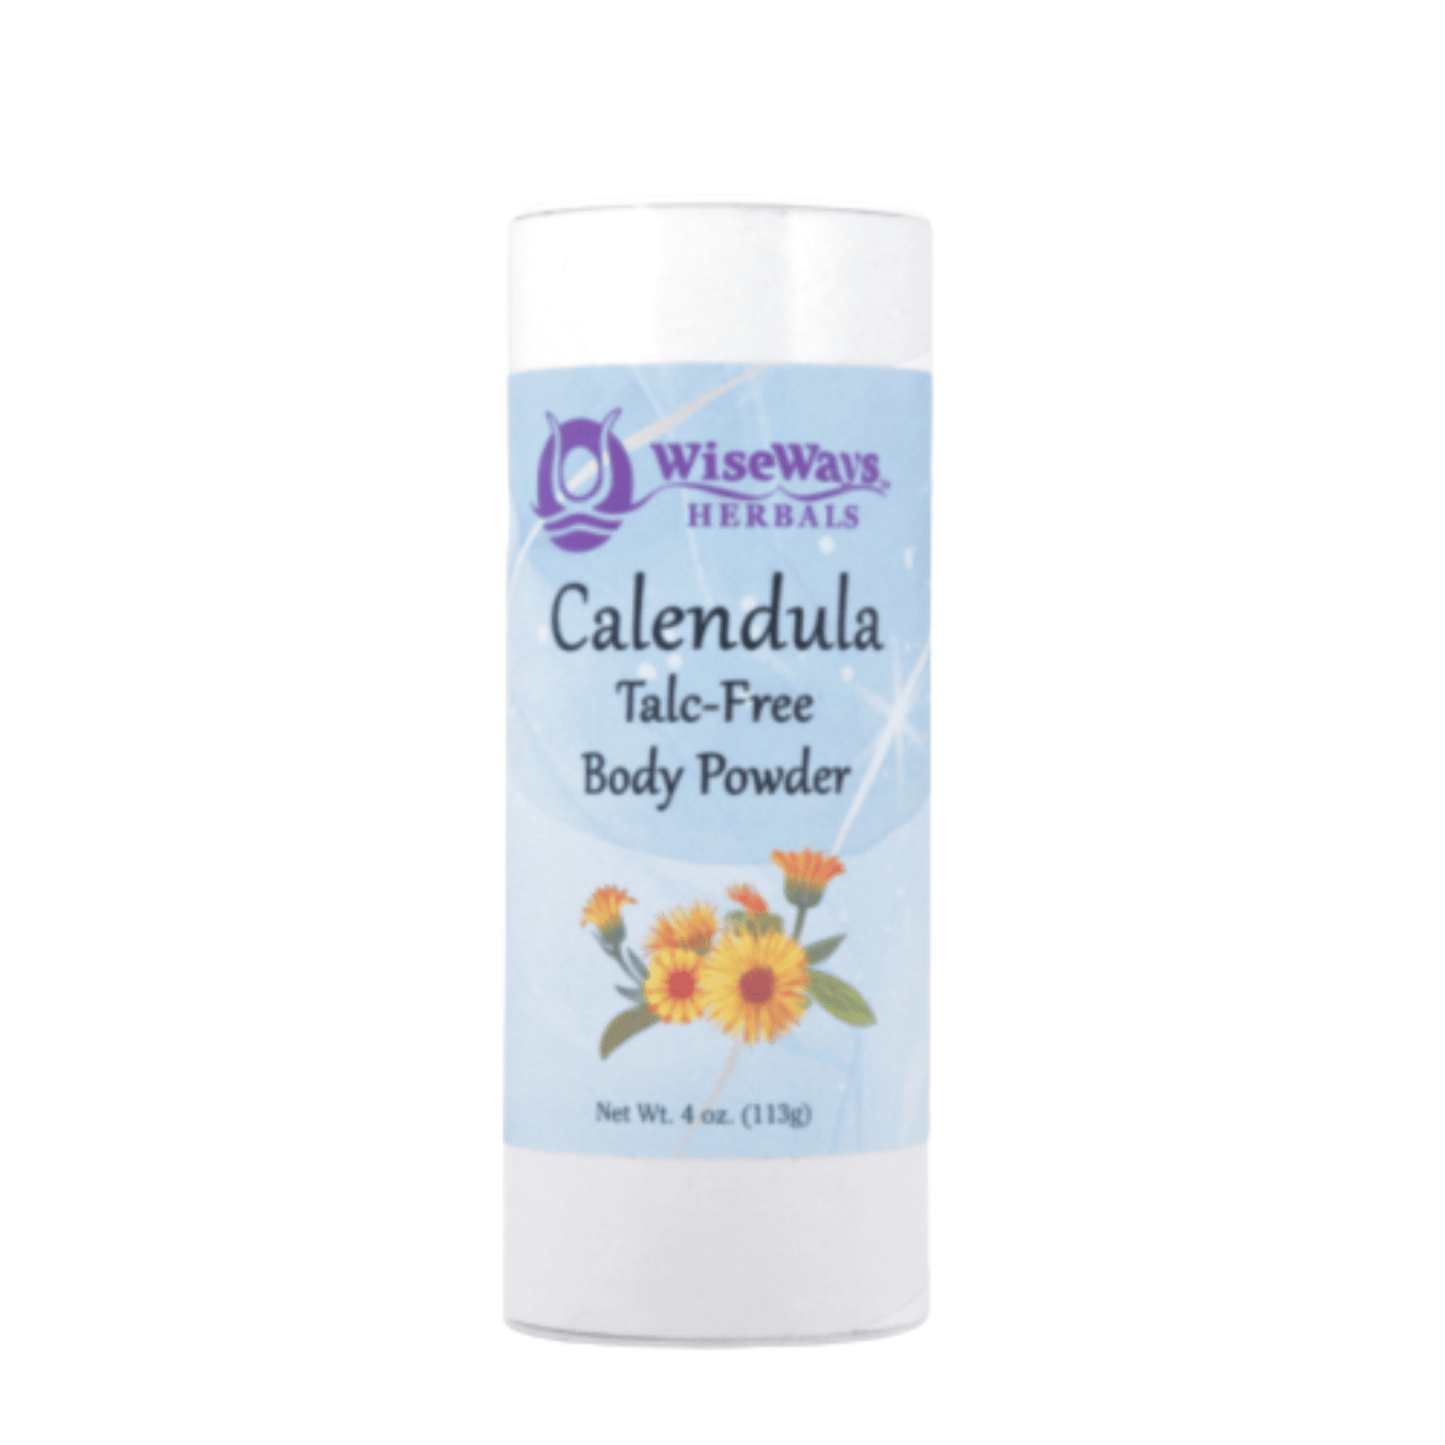 Primary Image of Calendula Body Powder